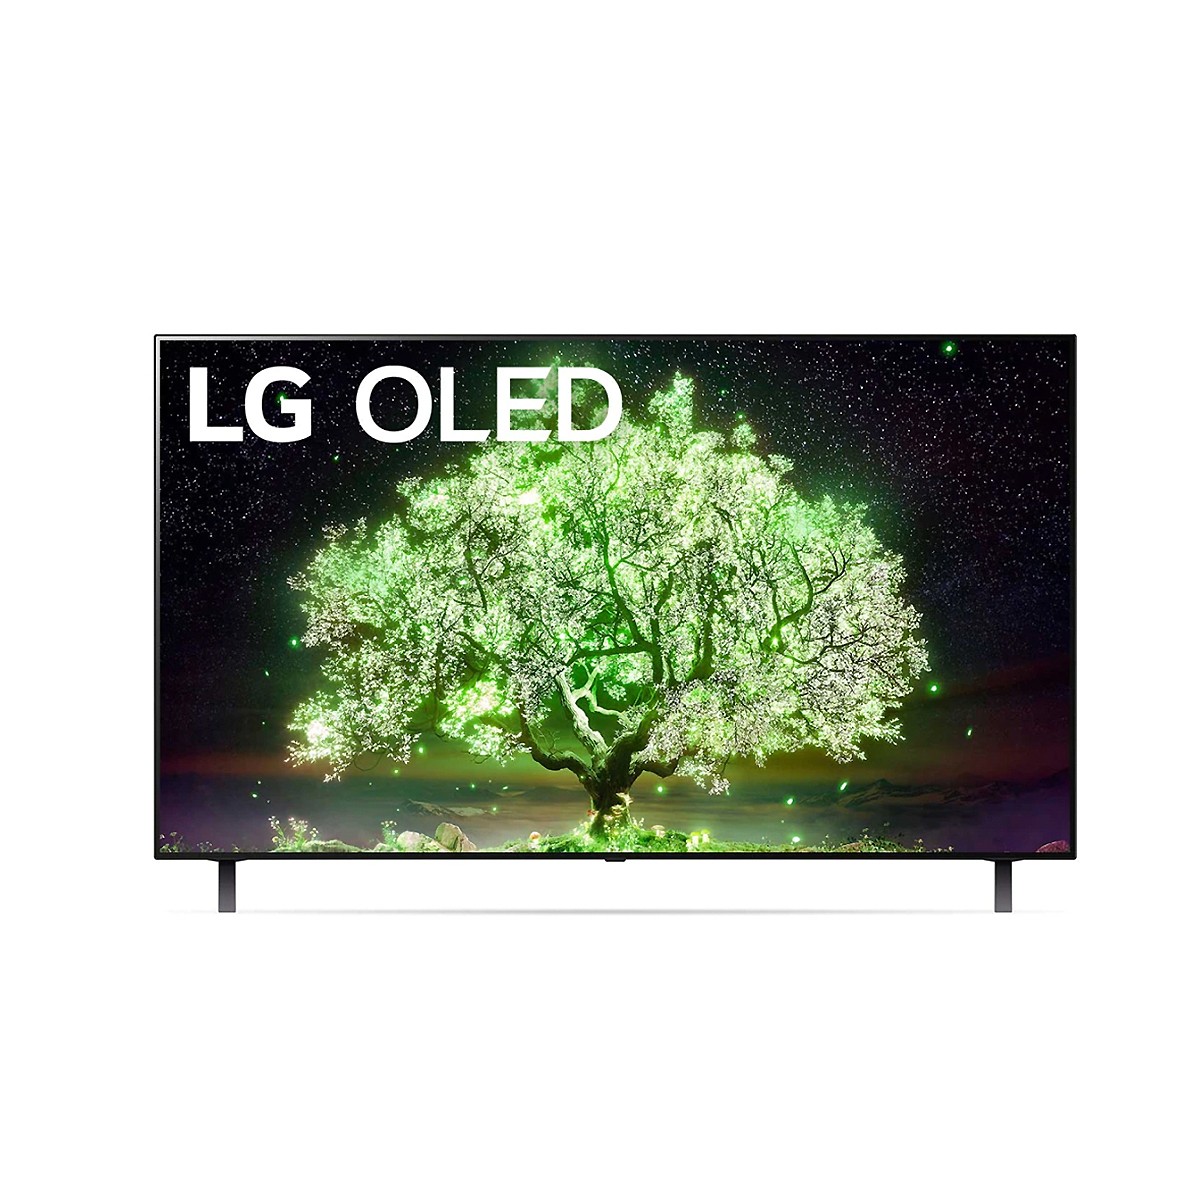 LG OLED TV A1系列 為首次體驗 OLED 電視的消費者提供入門選擇。